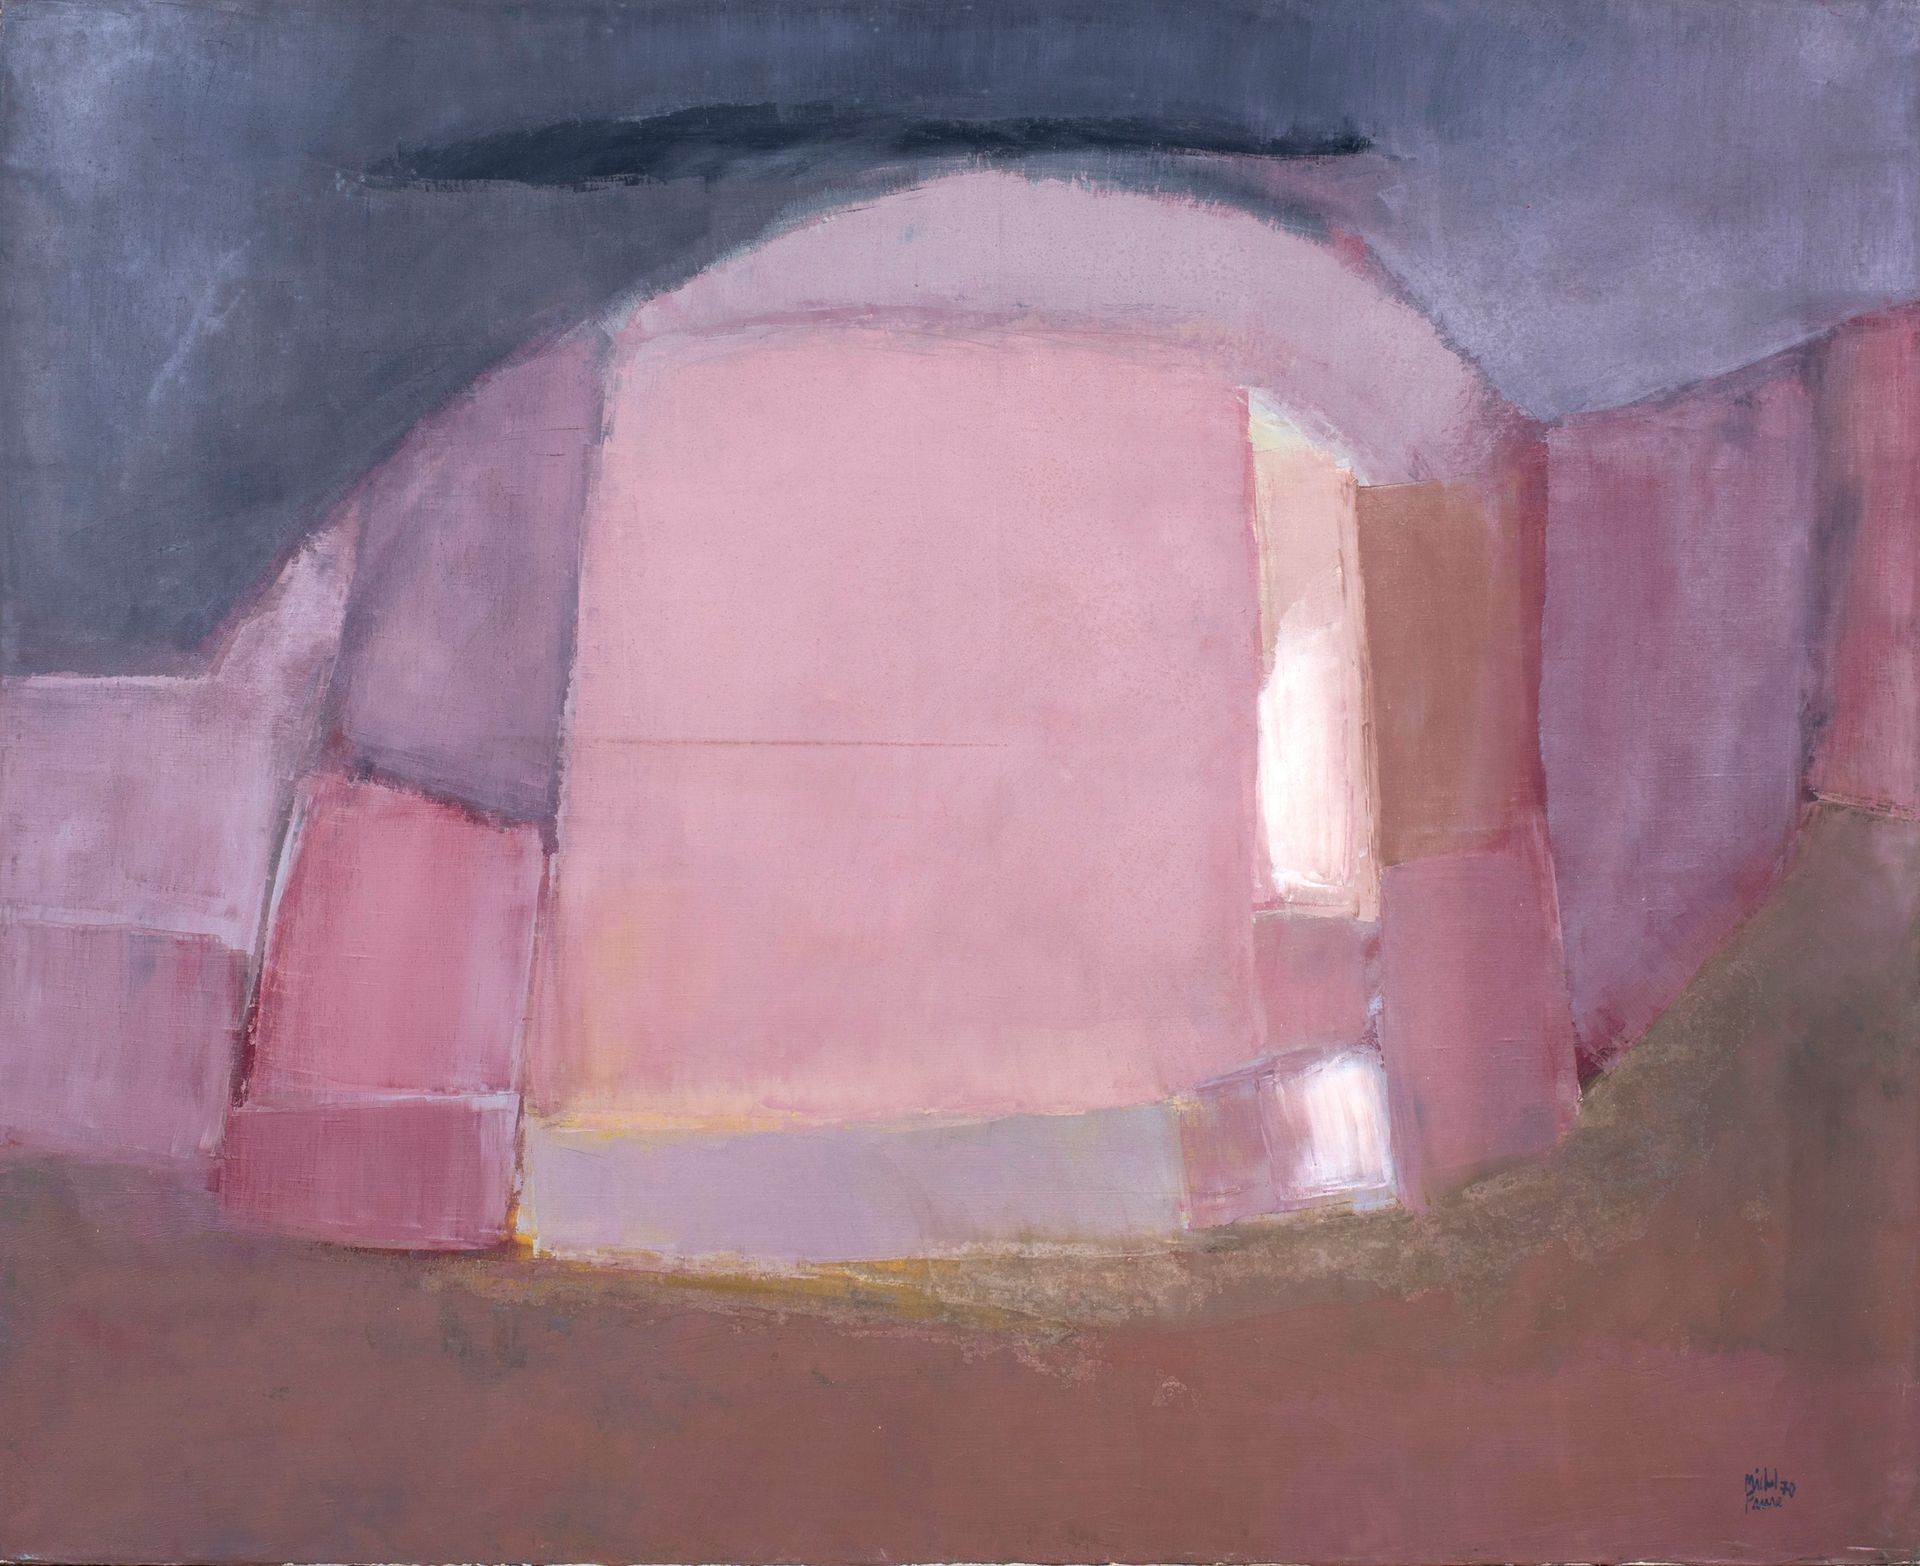 Null 米歇尔-法尔（1928-2009）。

紫色成分，1970年。

布面油画。右下方有签名和日期70。背面有副署，日期为70。

81 x 100厘米。